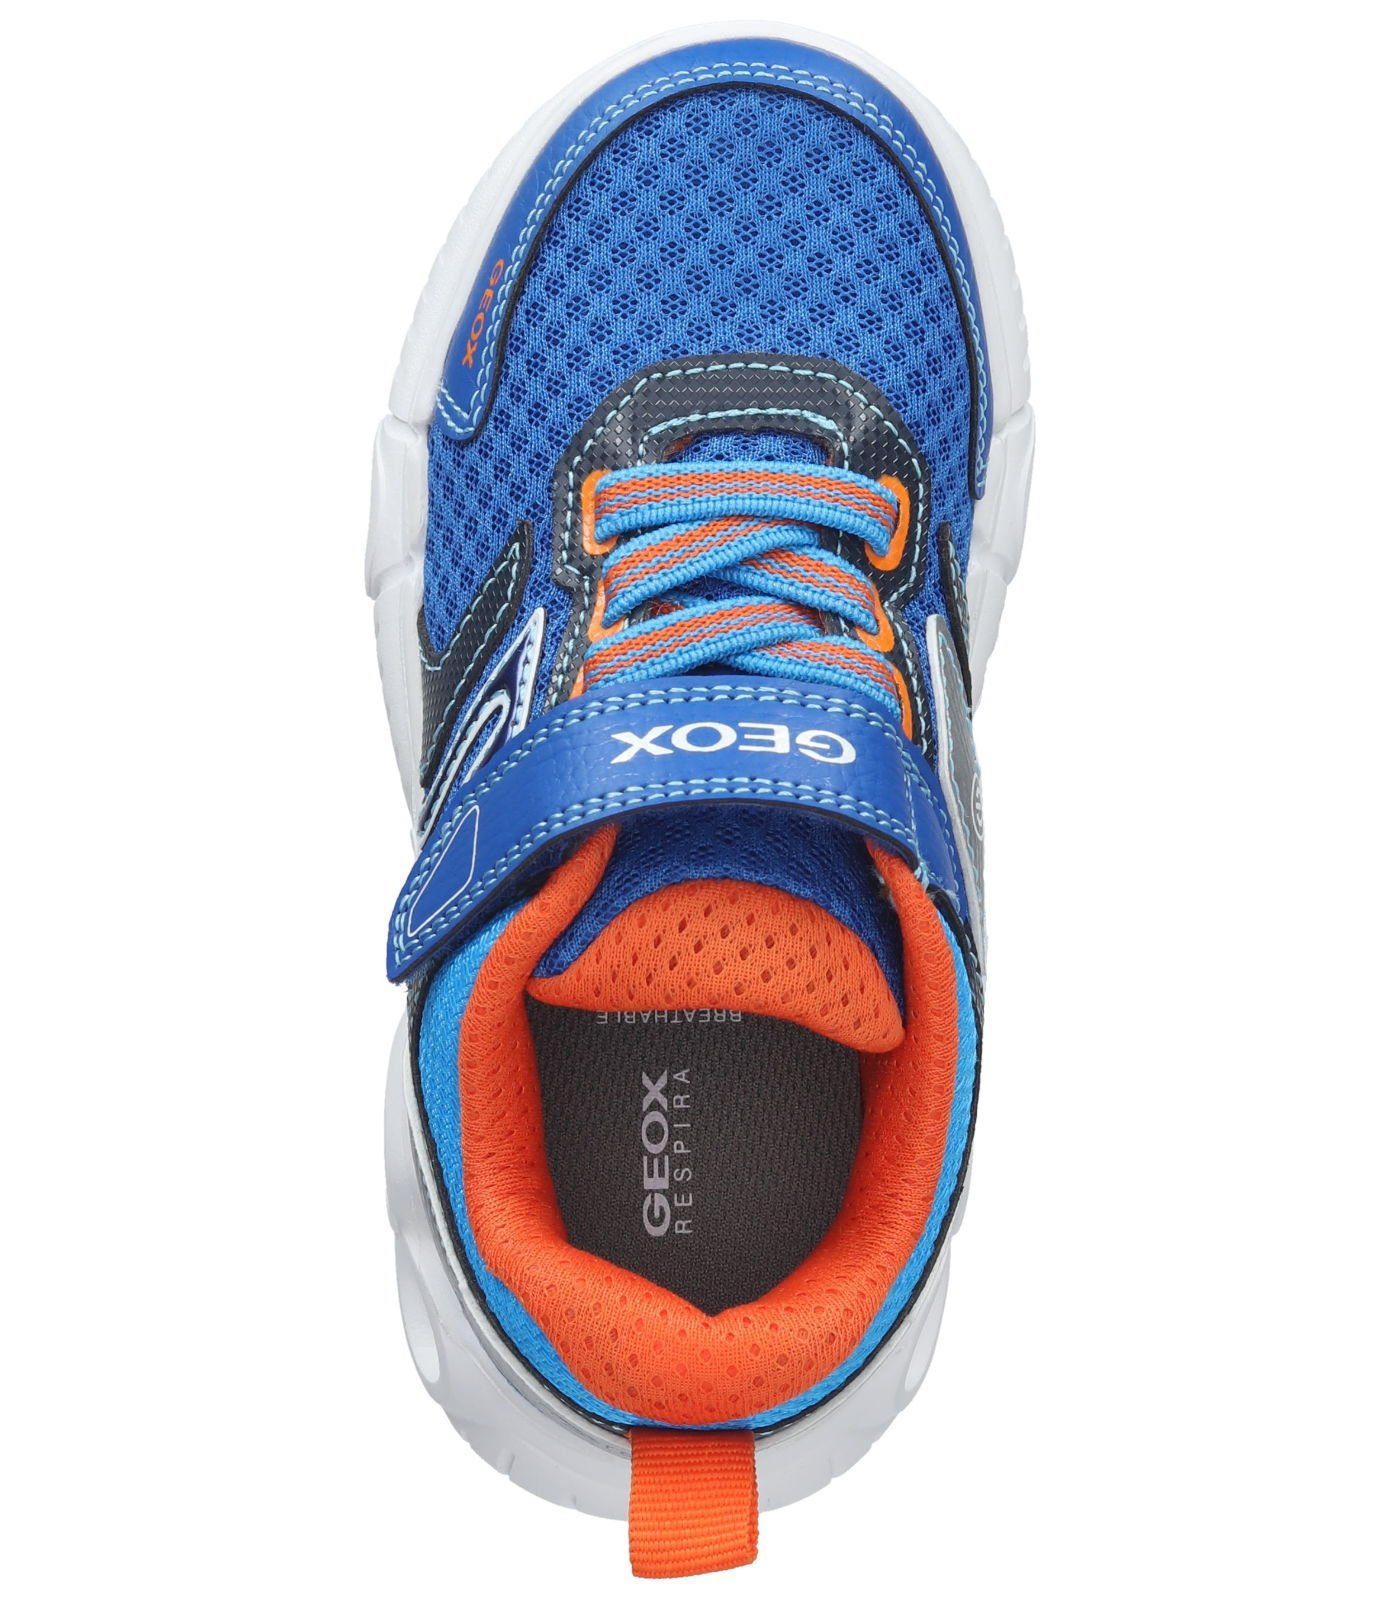 (ROYAL/ORANGE) Lederimitat/Textil Geox Sneaker Blau Sneaker